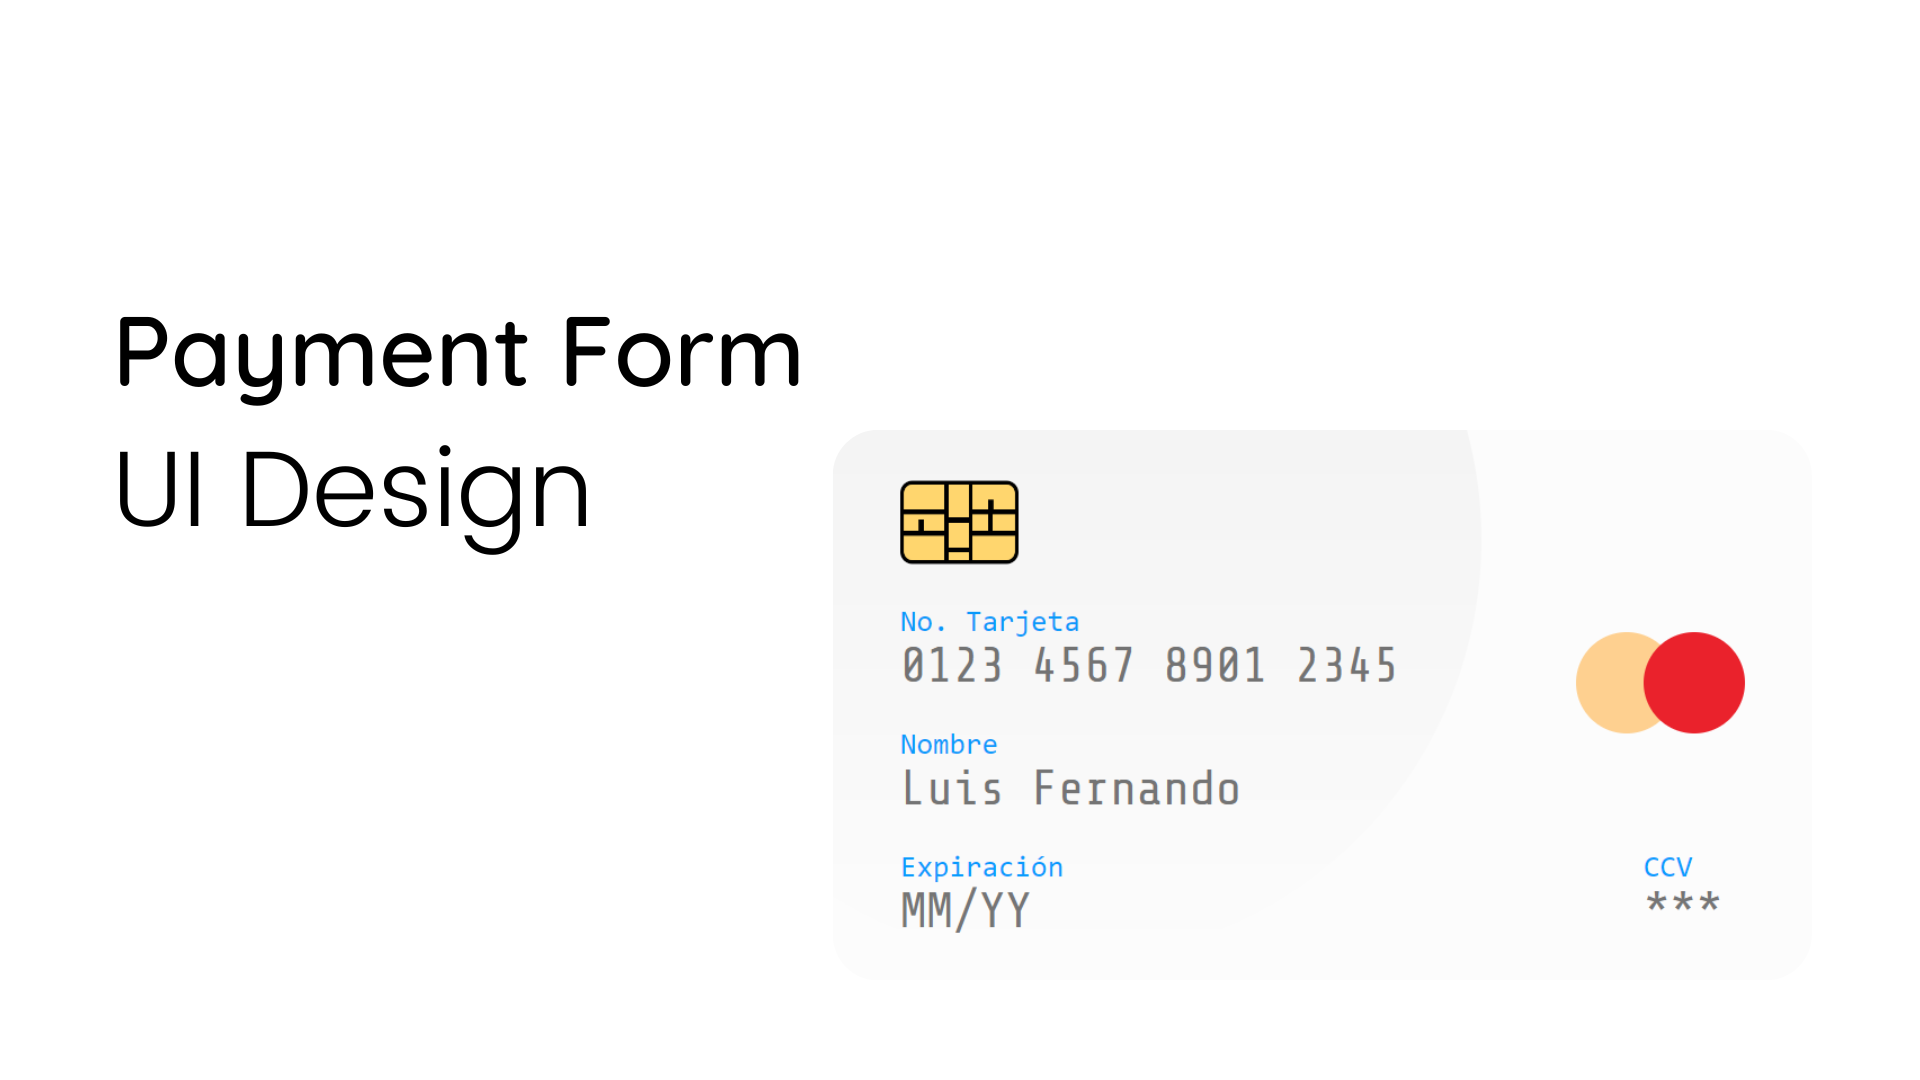 Payment Form - UI Design